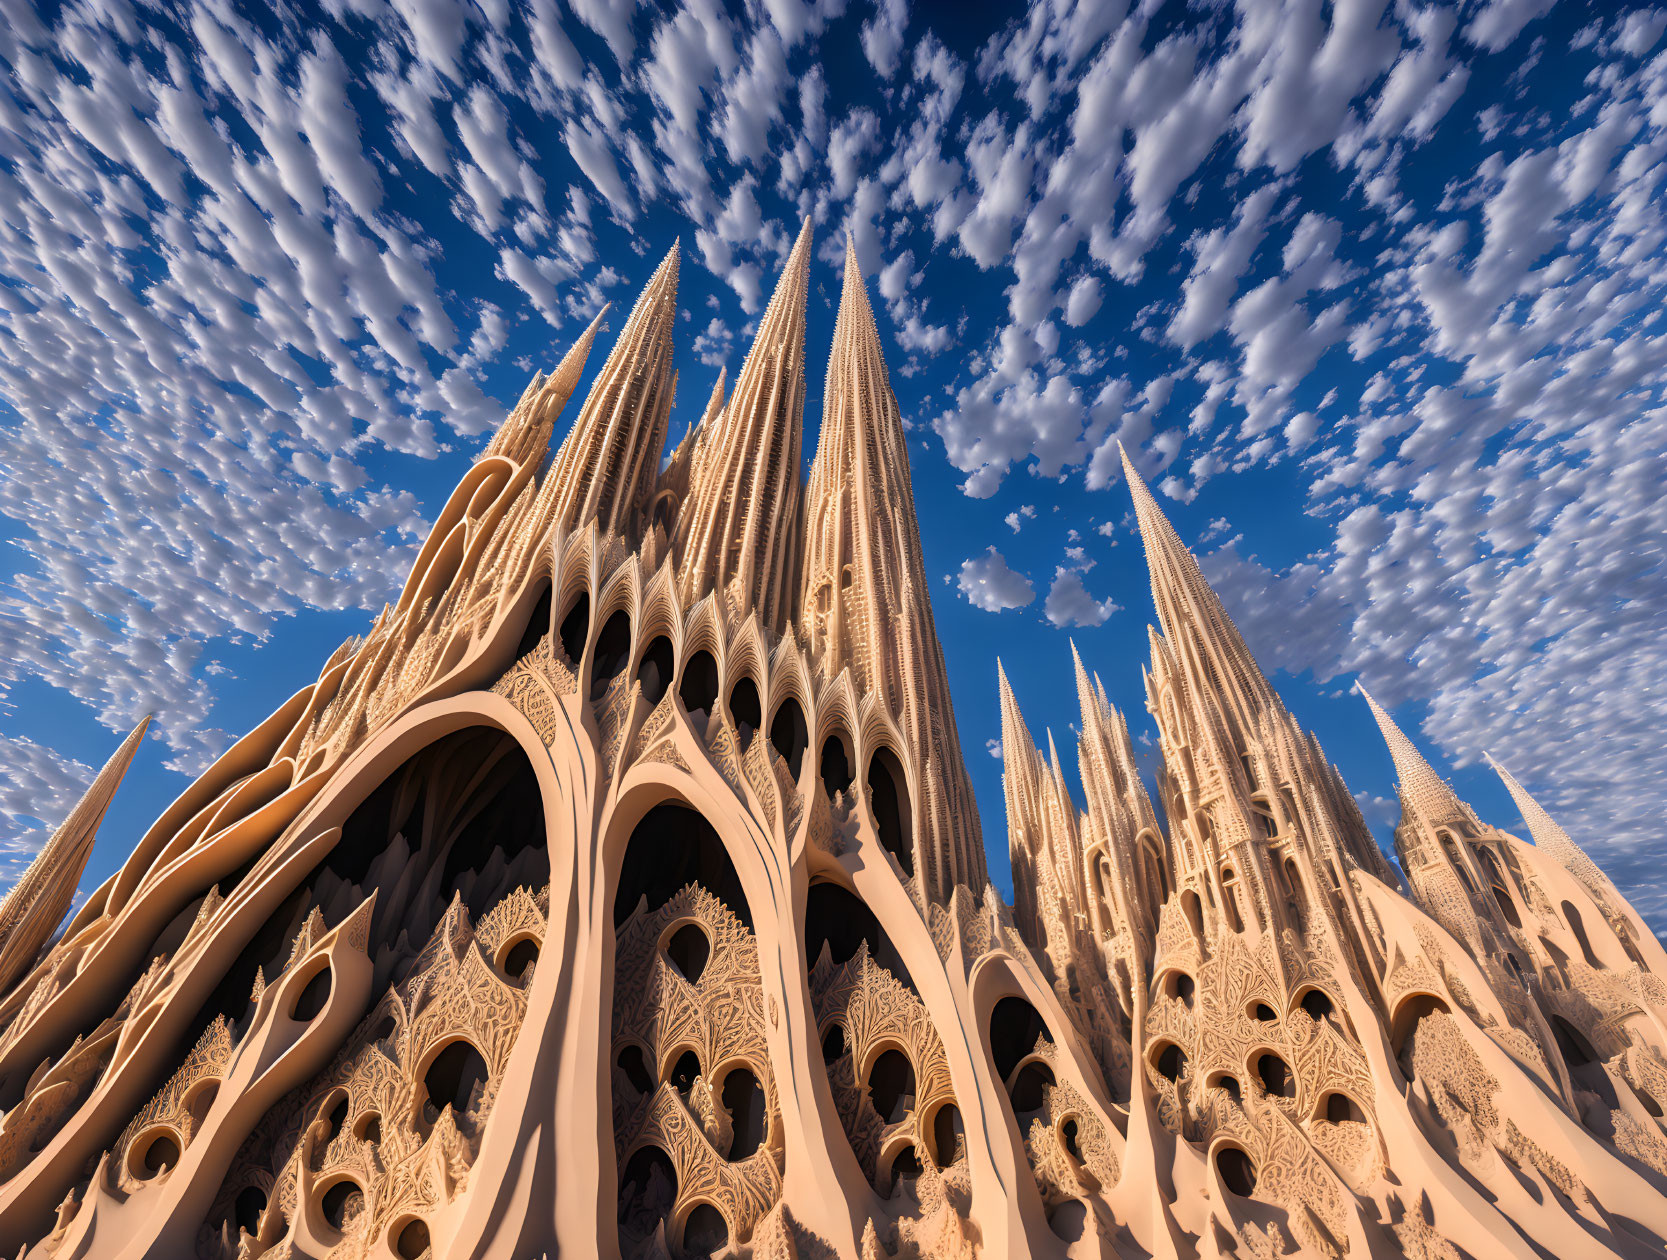 sand drip castle resembling the Sagrada Familia